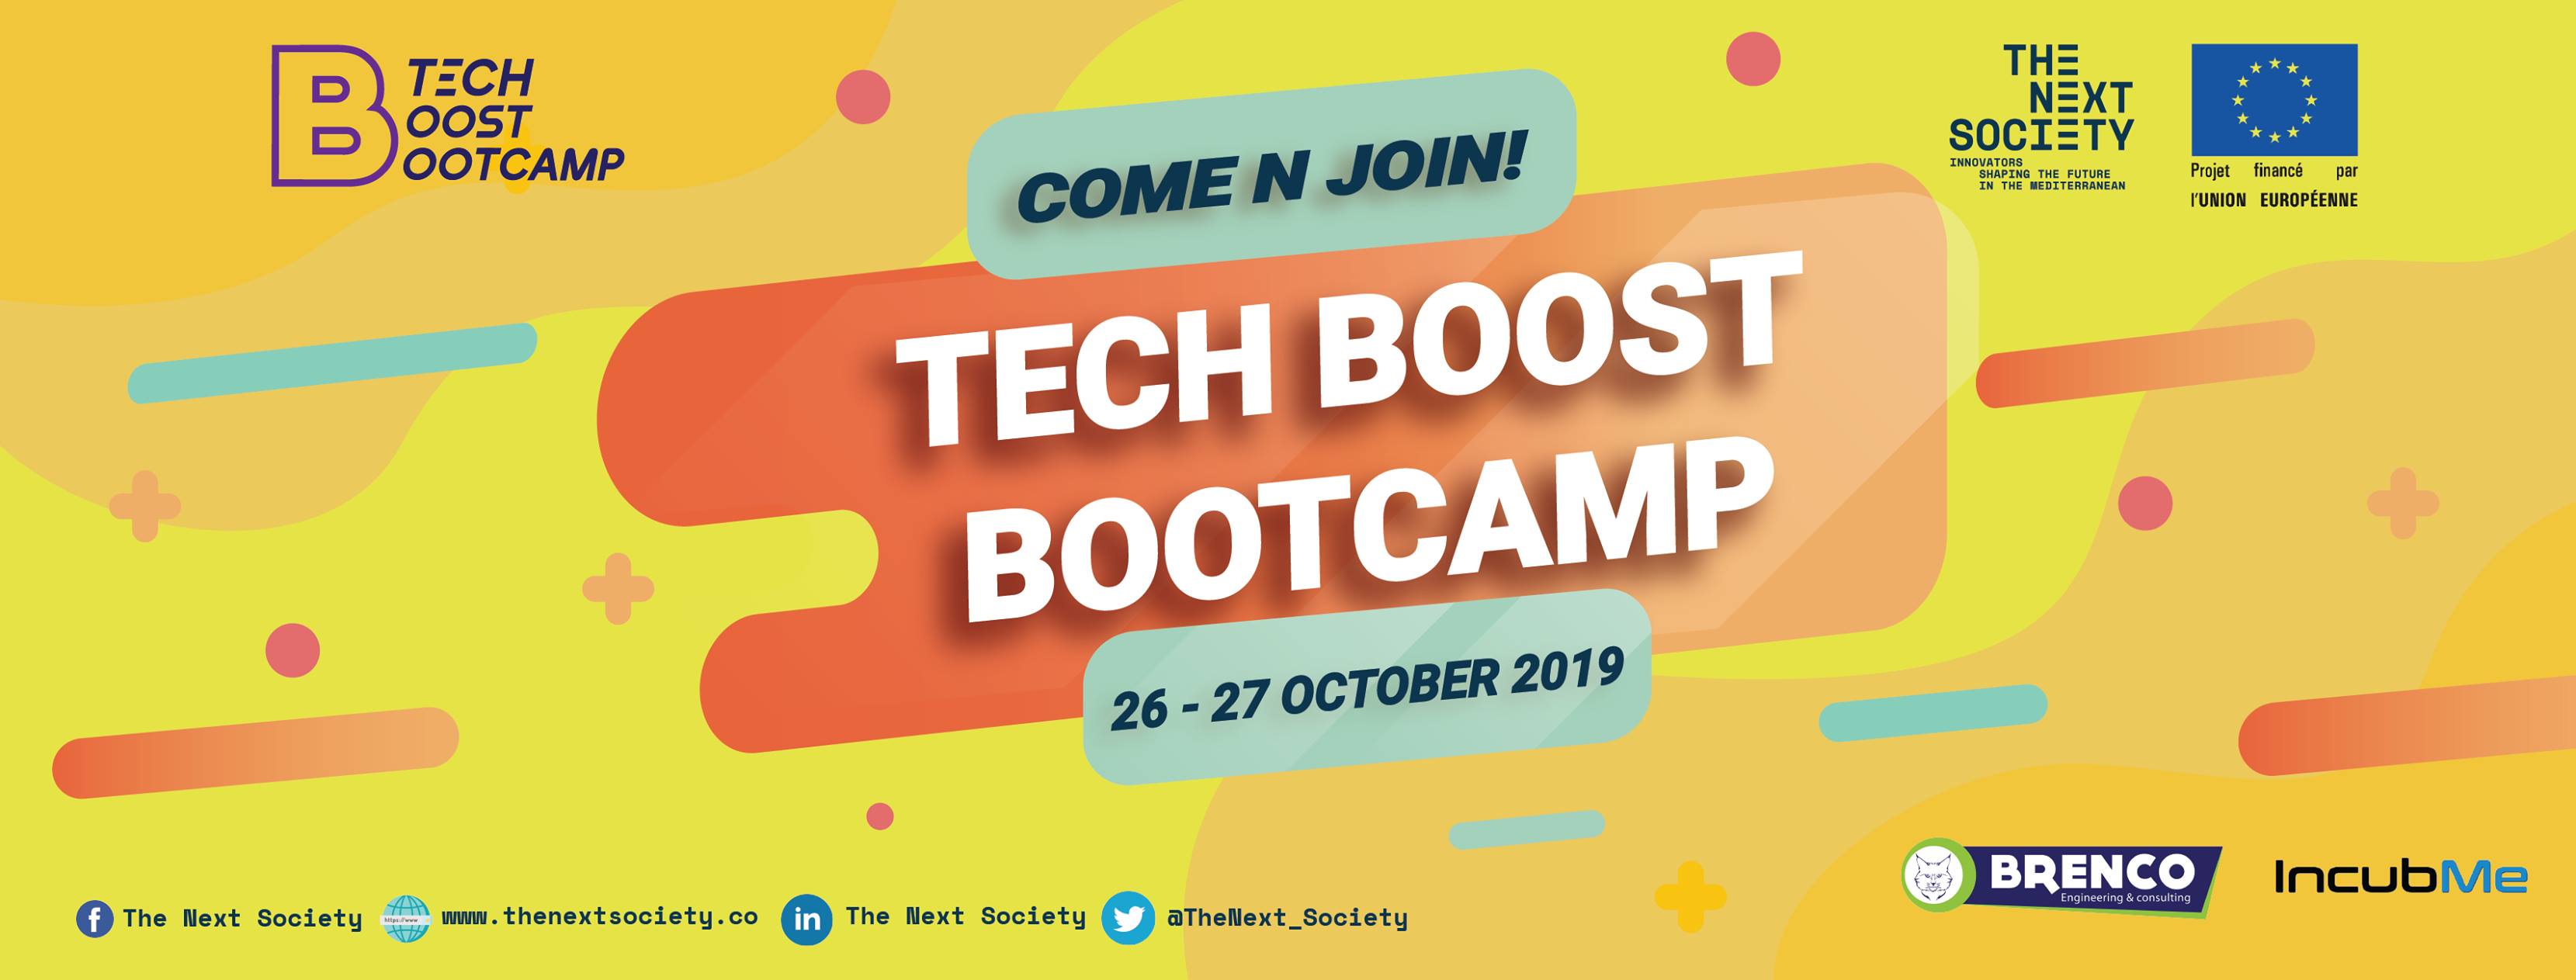 Next Society lance le Tech Boost Bootcamp Algérie